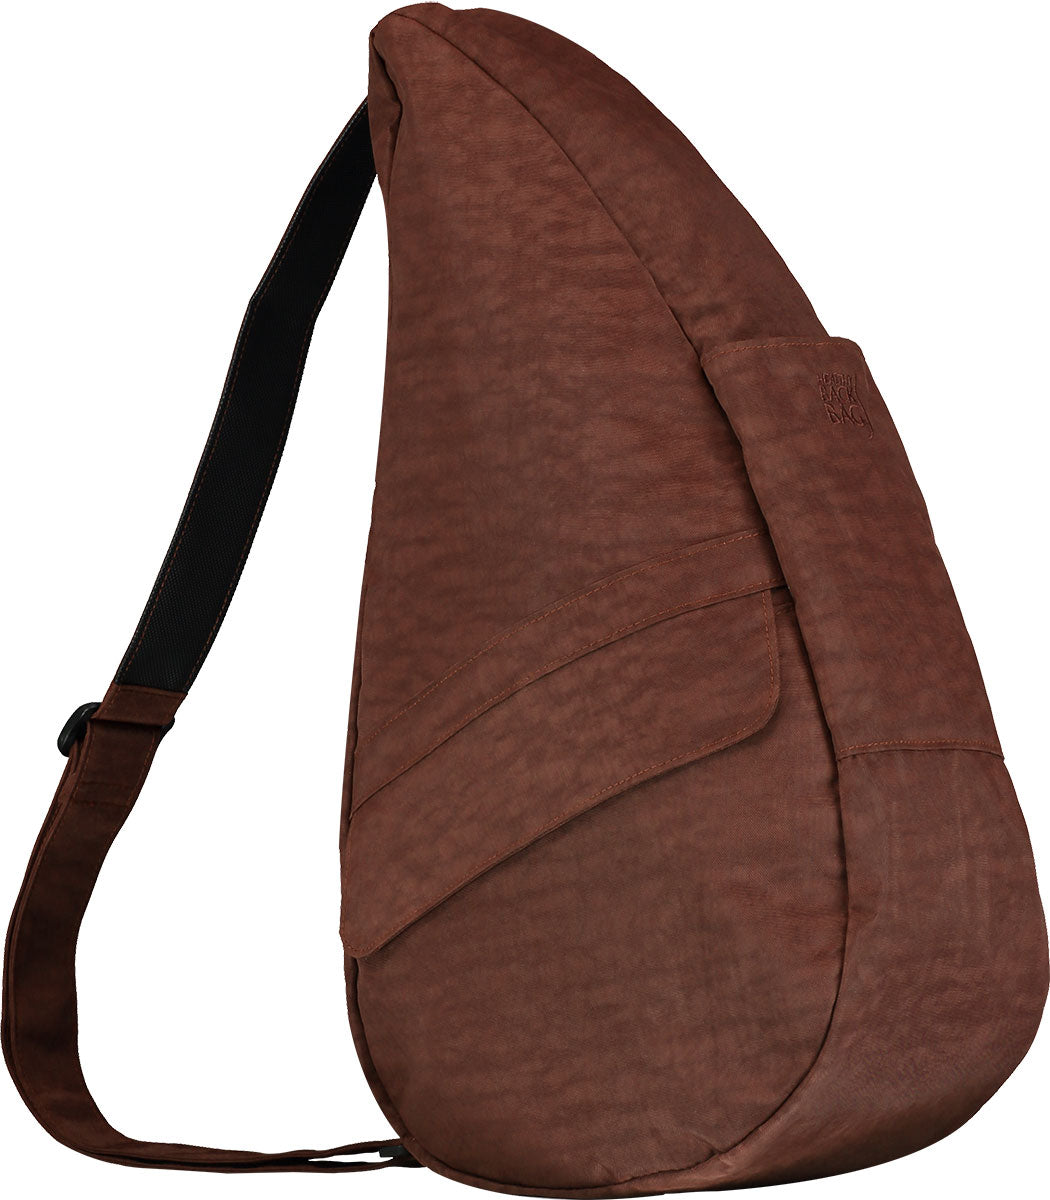 AmeriBag Healthy Back Bag tote Distressed Nylon Medium (Brown)